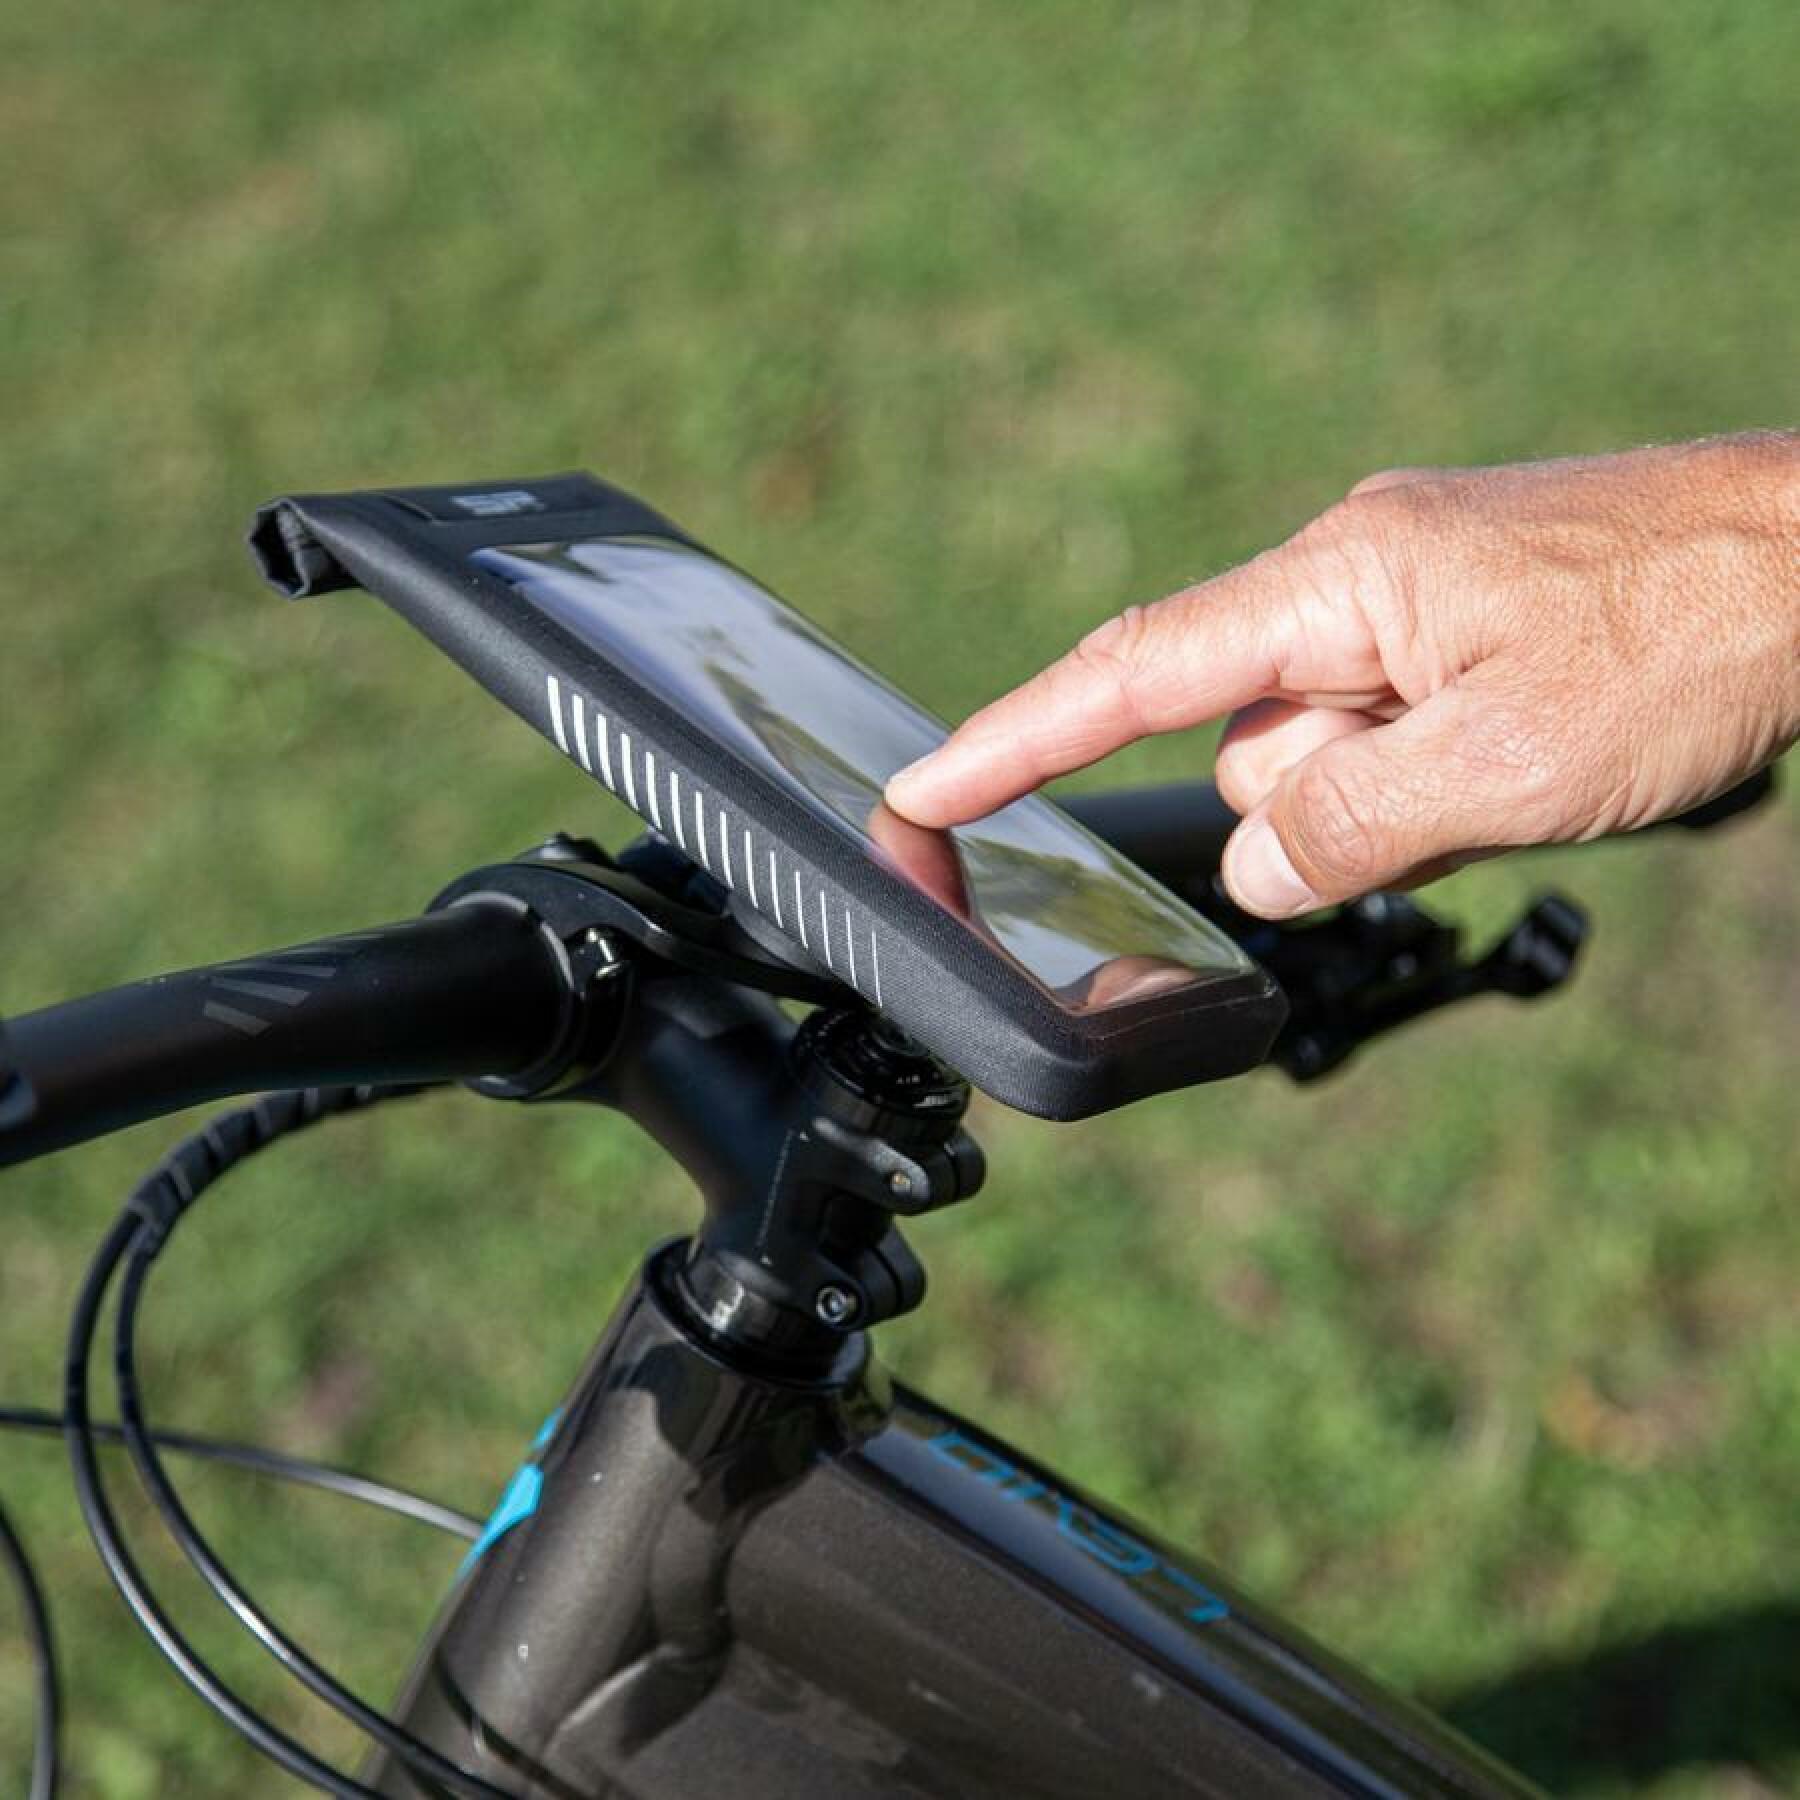 Phone holder + case SP Connect Bike Bundle II Universal Case